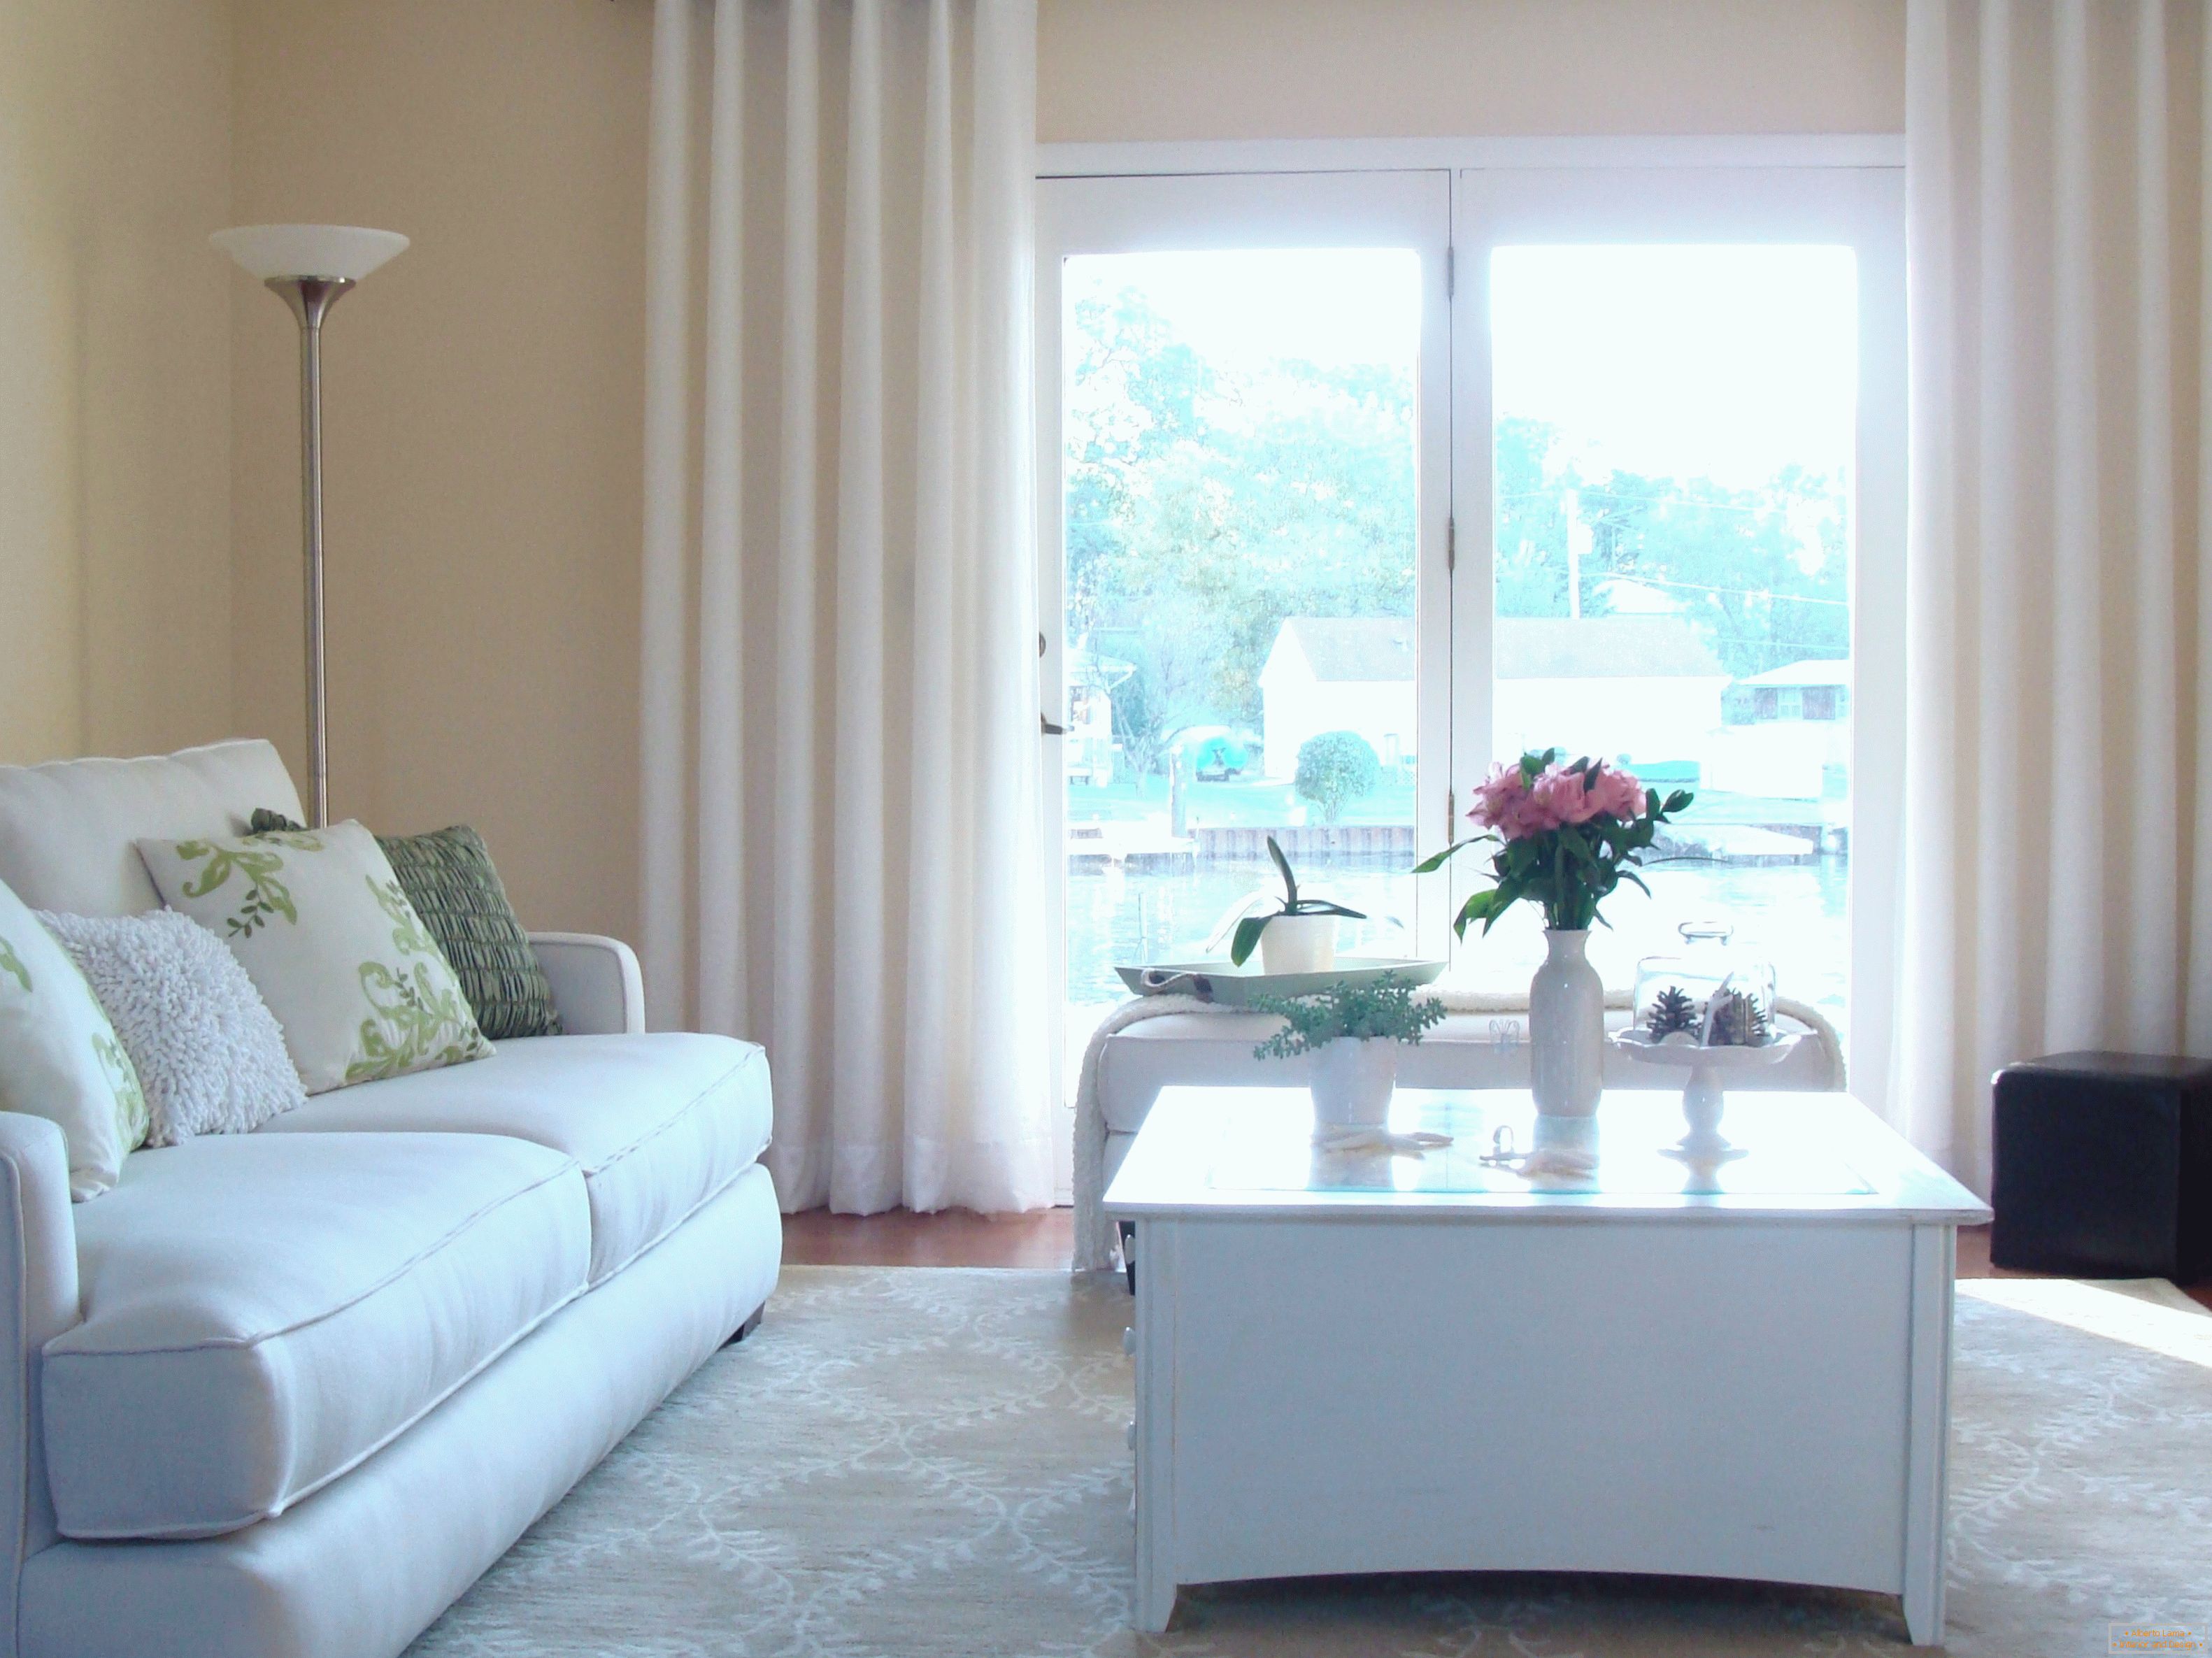 Jednoduchý dekorový obývací pokoj s bílými závěsy